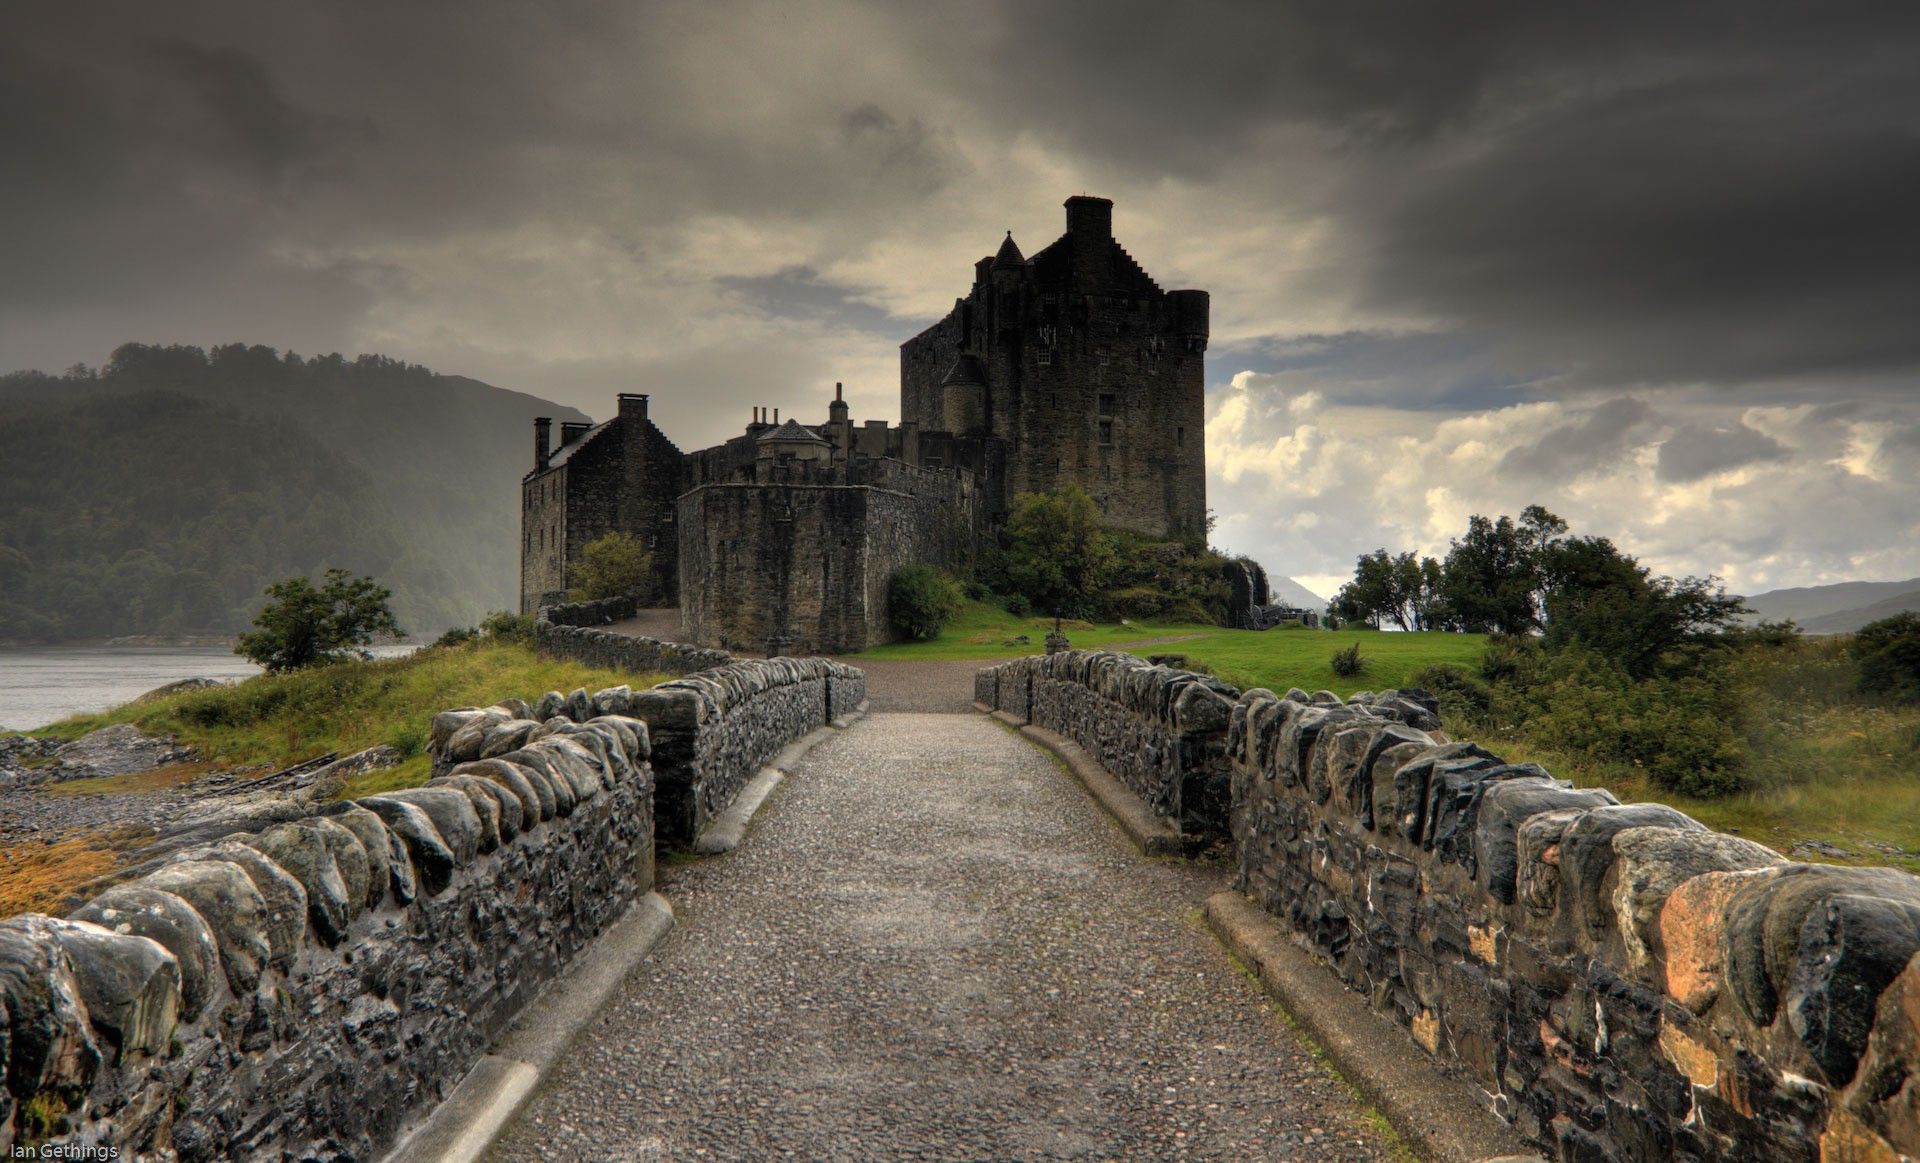 #UK, #medieval, #architecture, #stone, #castle, #overcast, #Scotland, wallpaper. Mocah.org HD Wallpaper